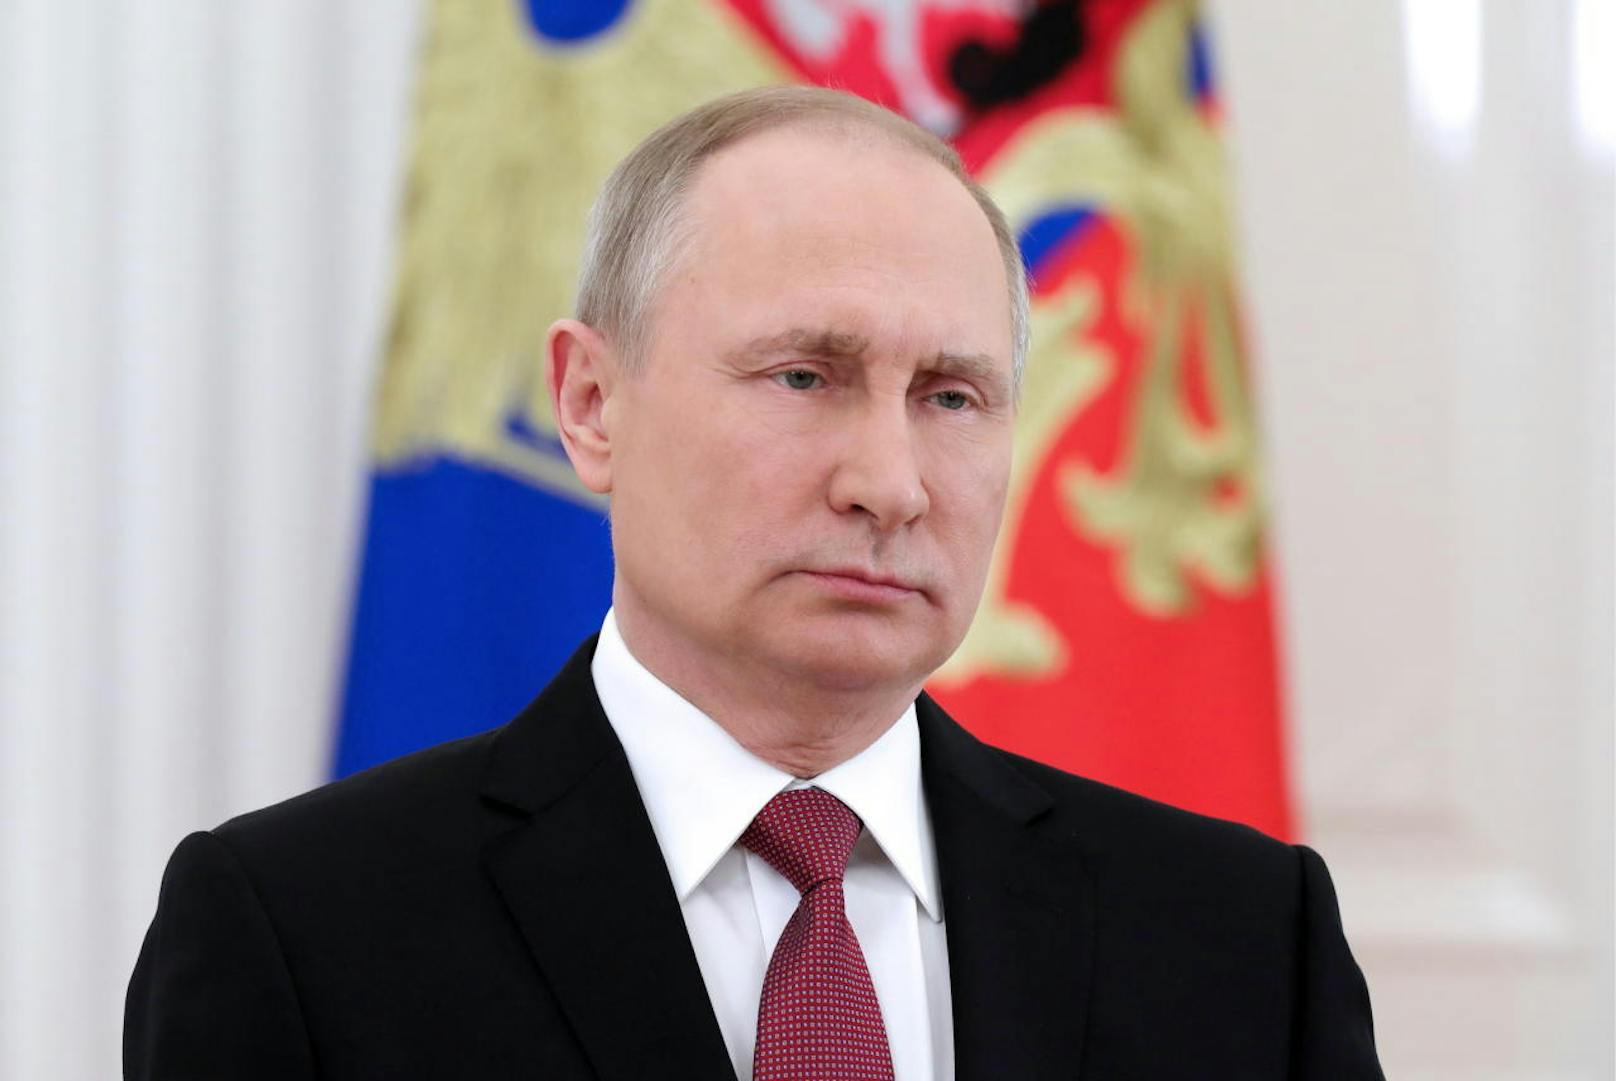 Nach Ausweisung dutzender russischer Diplomaten hat Moskau nun Vergeltungsmaßnahmen angekündigt.